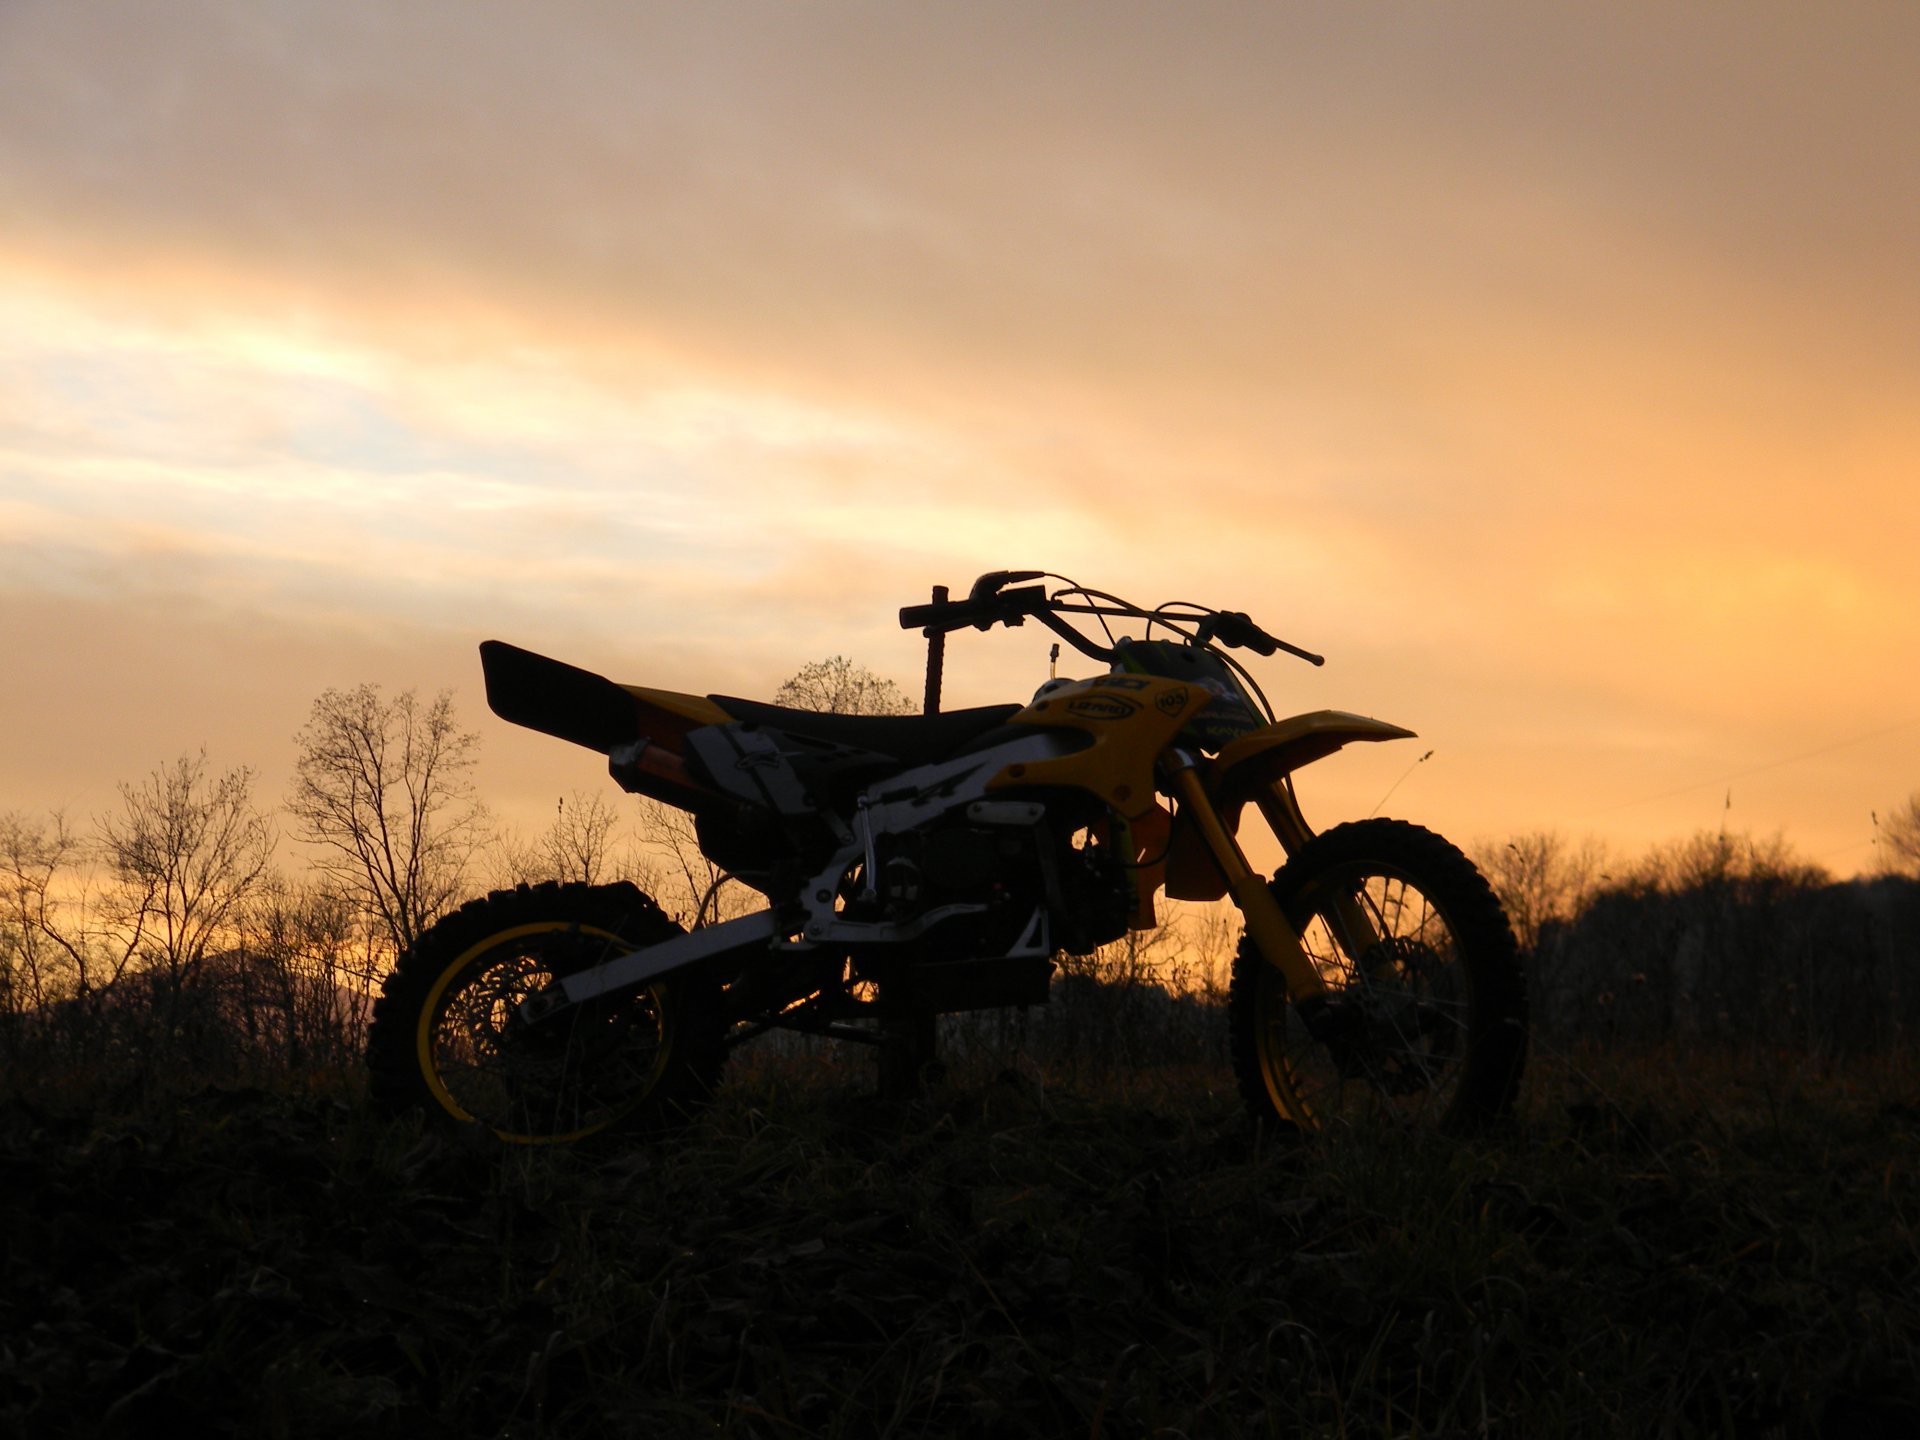 Sunset Bike Racing - Motocross free instals